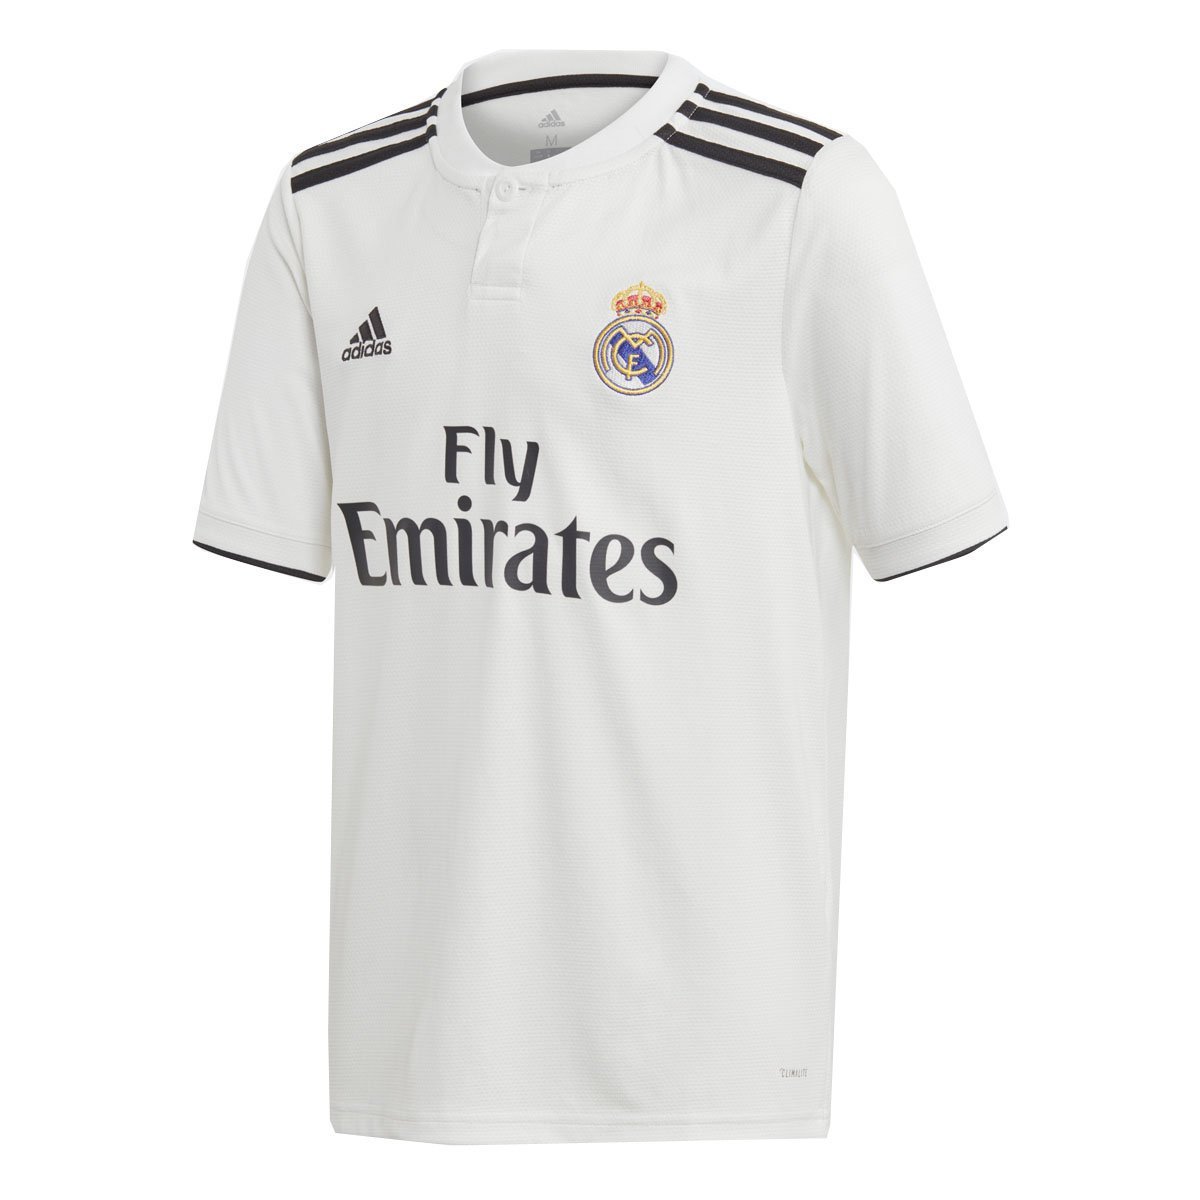 Playera Soccer Real Madrid Adidas - Caballero